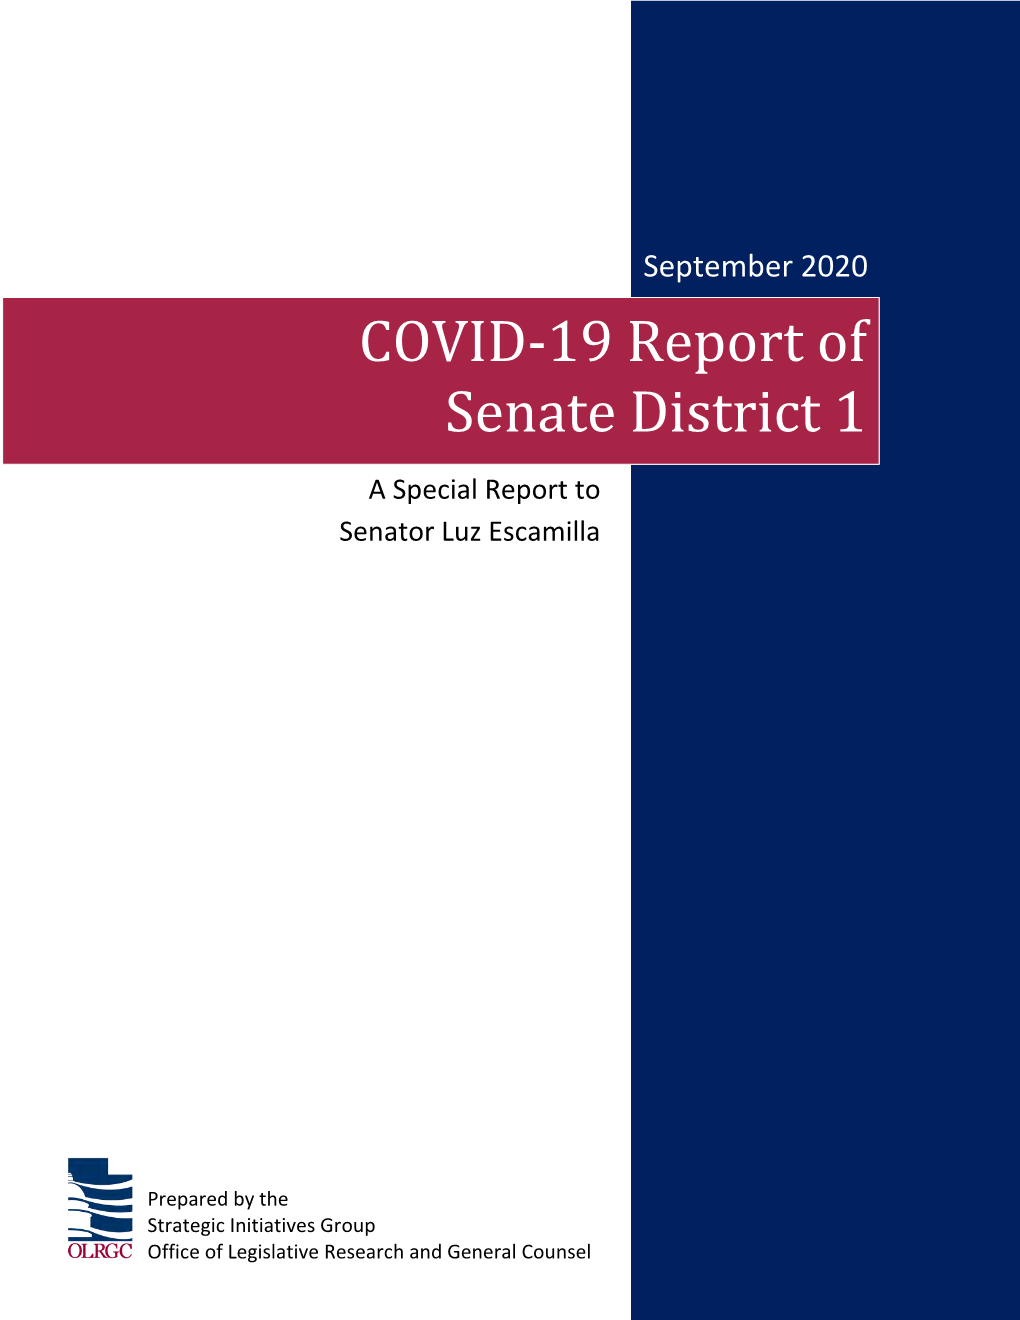 Sept 2020 COVID-19 Report of Senate District 1